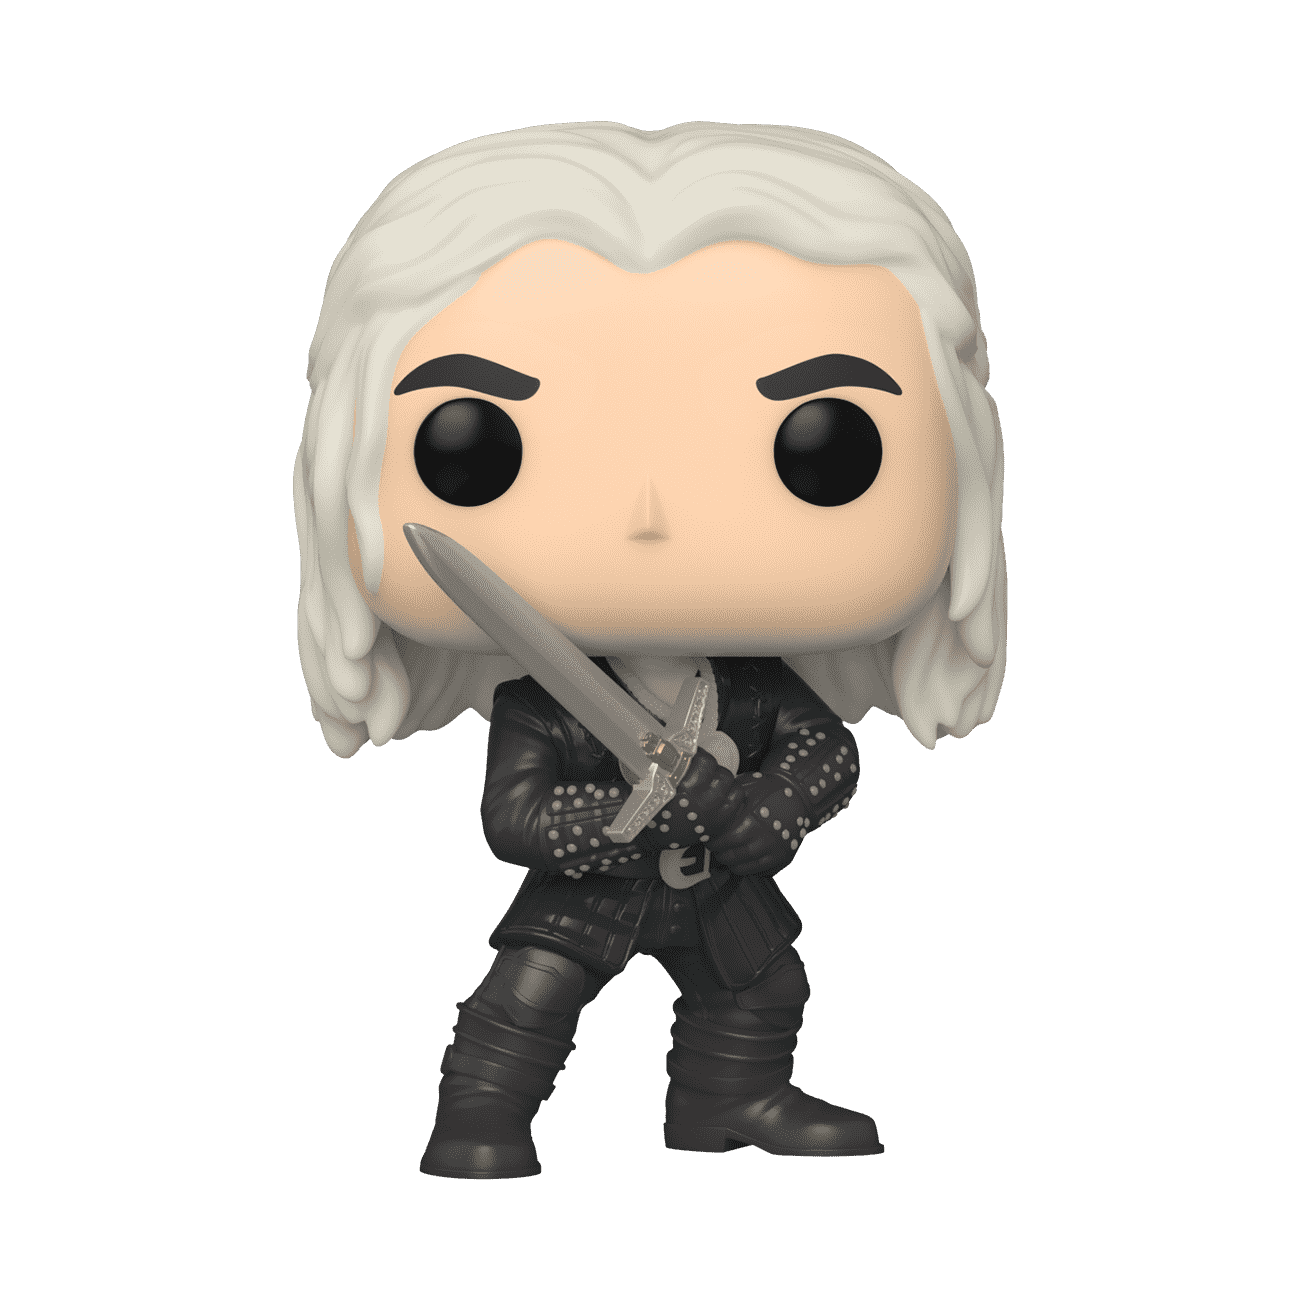 Pop! Geralt at Funko.